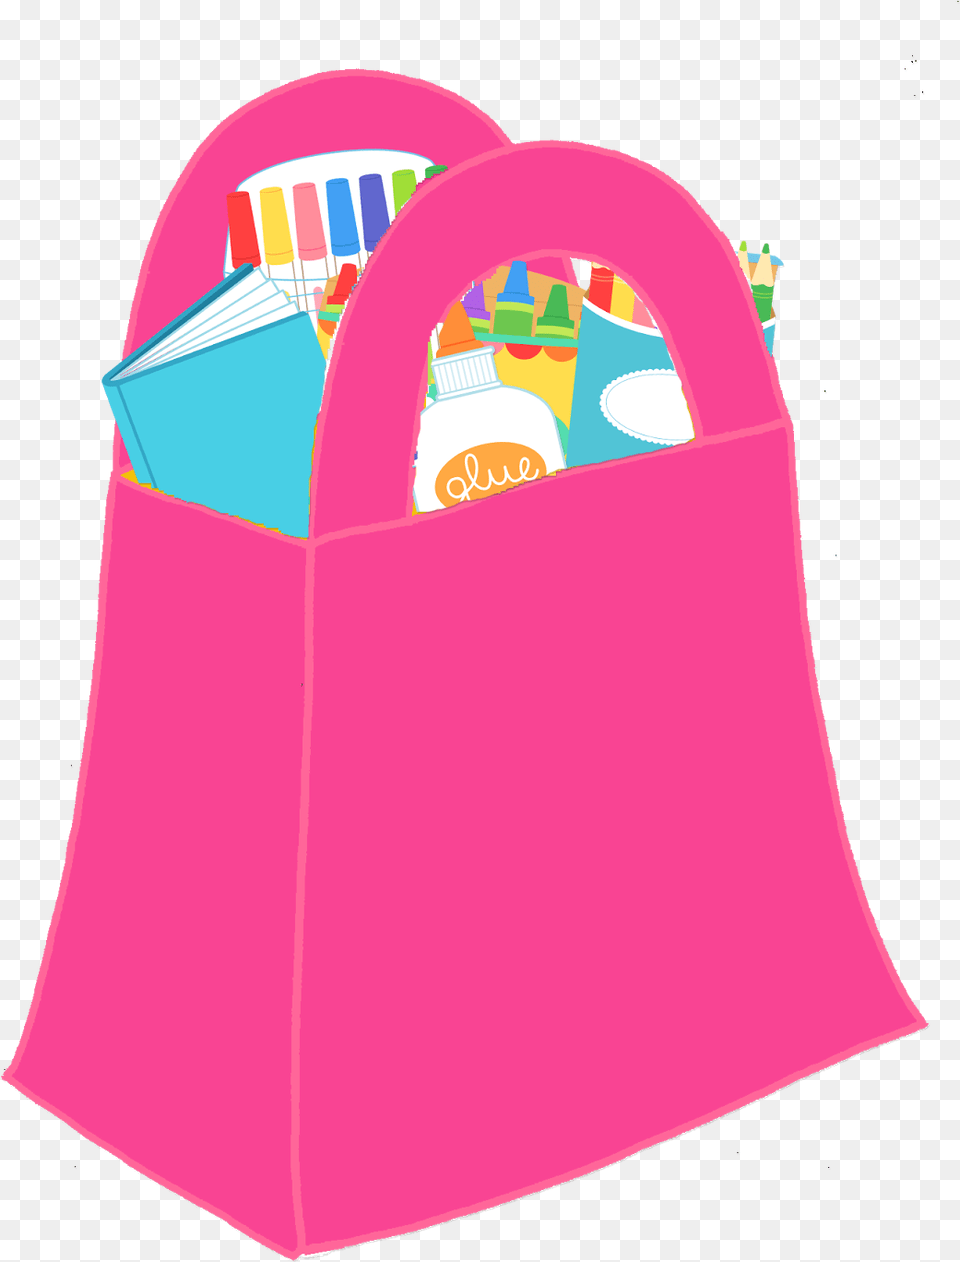 Cute Shopping Bag Clip Art Cute Shopping Bag Clipart, Tent, Furniture, Bed, Crib Free Transparent Png